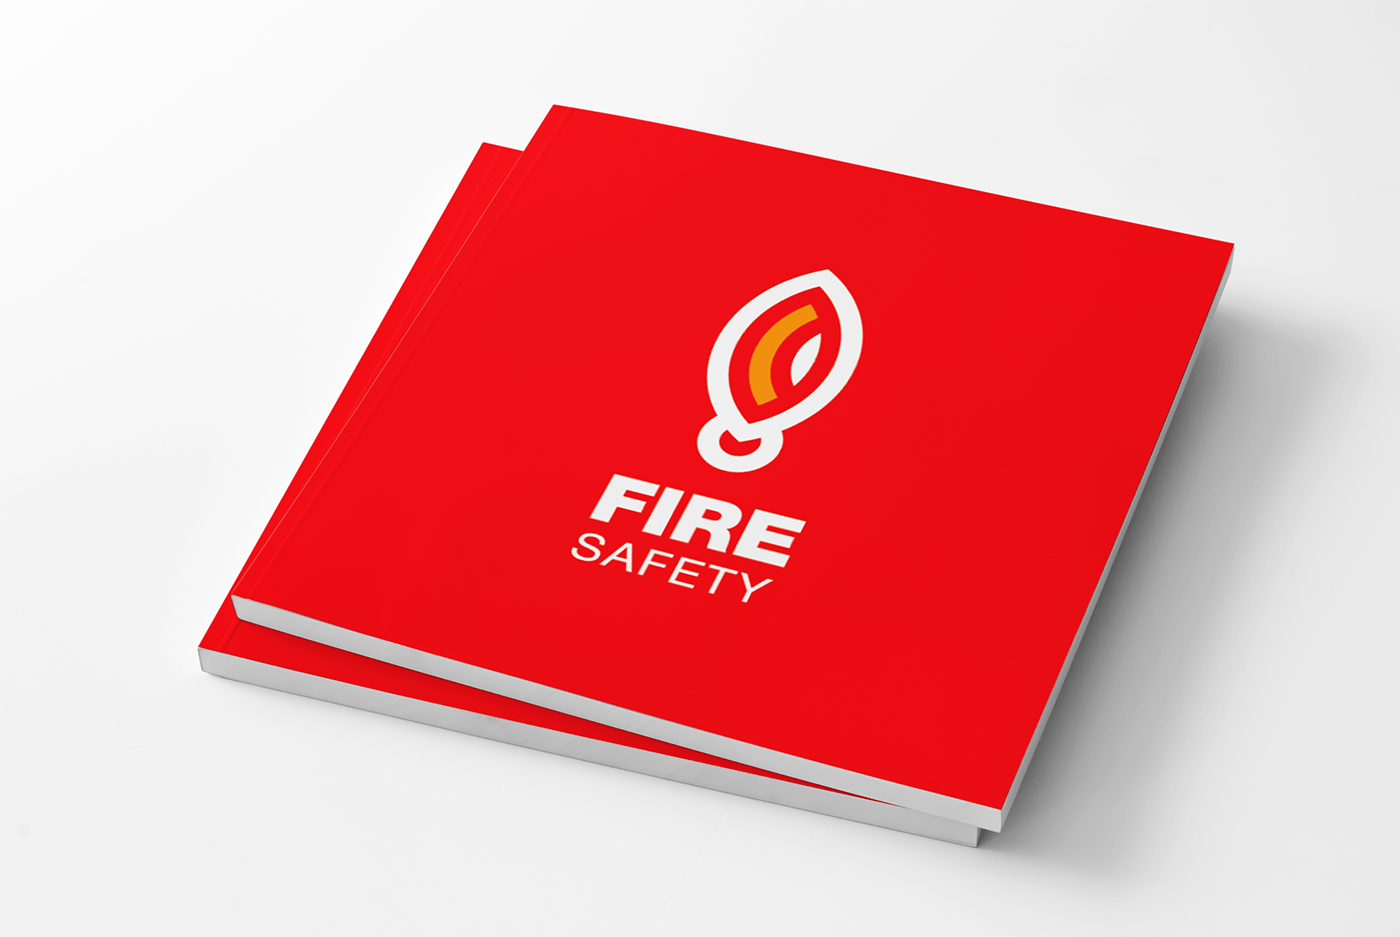 Brandbook design for a fire safety company.